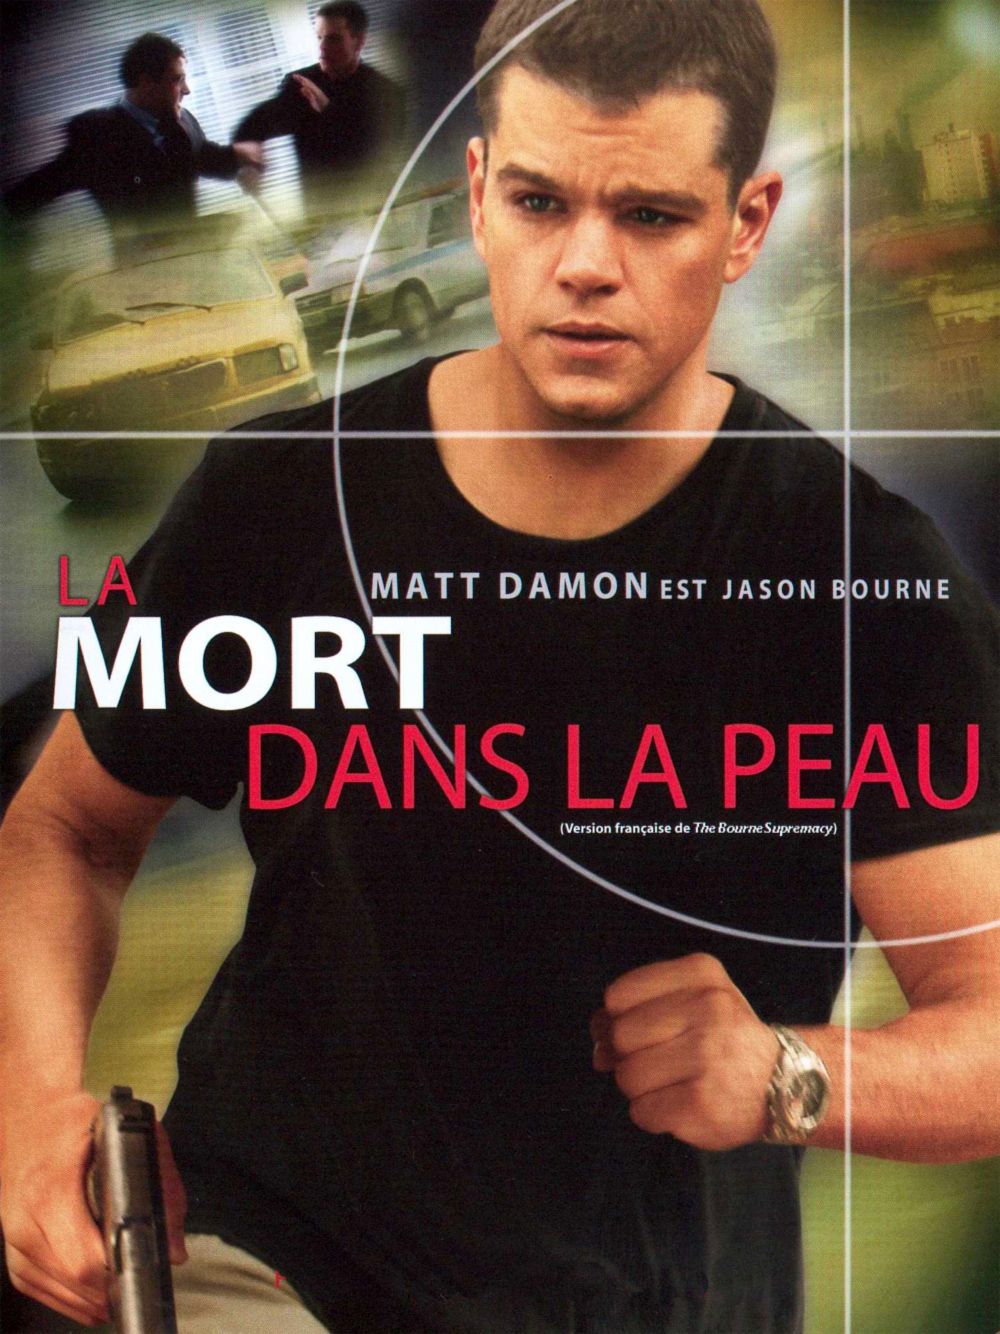 La Mort dans la peau - Film (2004) - SensCritique